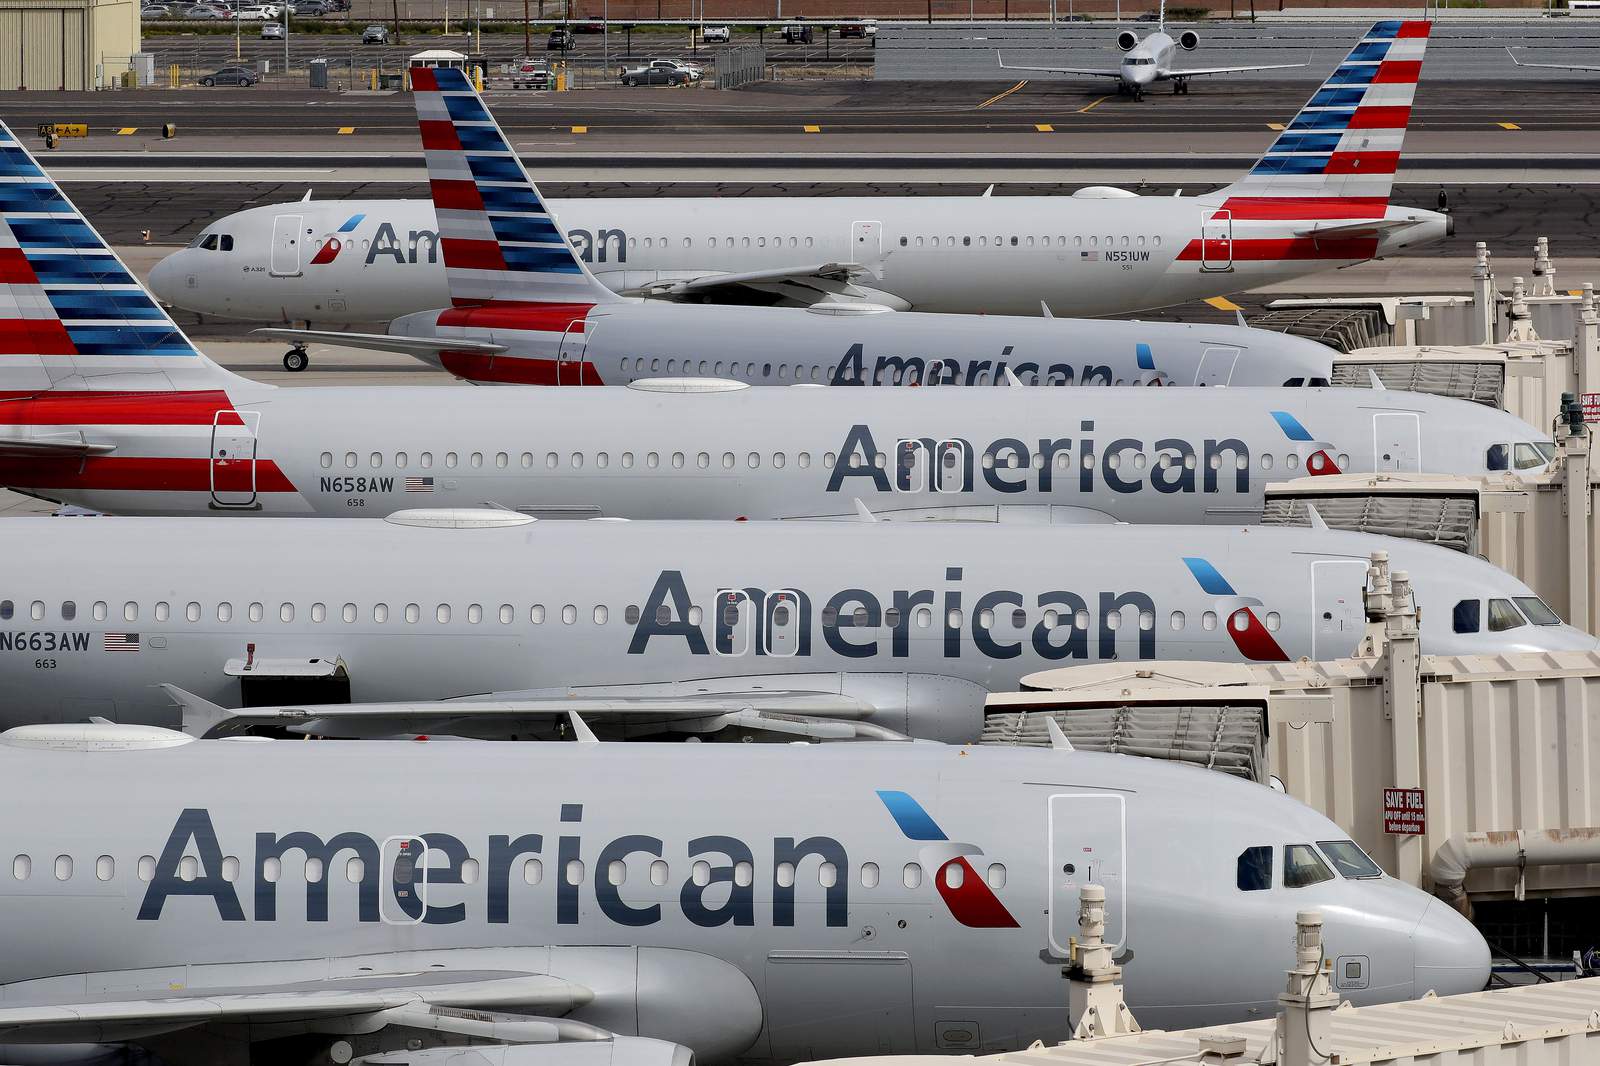 American Airlines, JetBlue form partnership during coronavirus pandemic